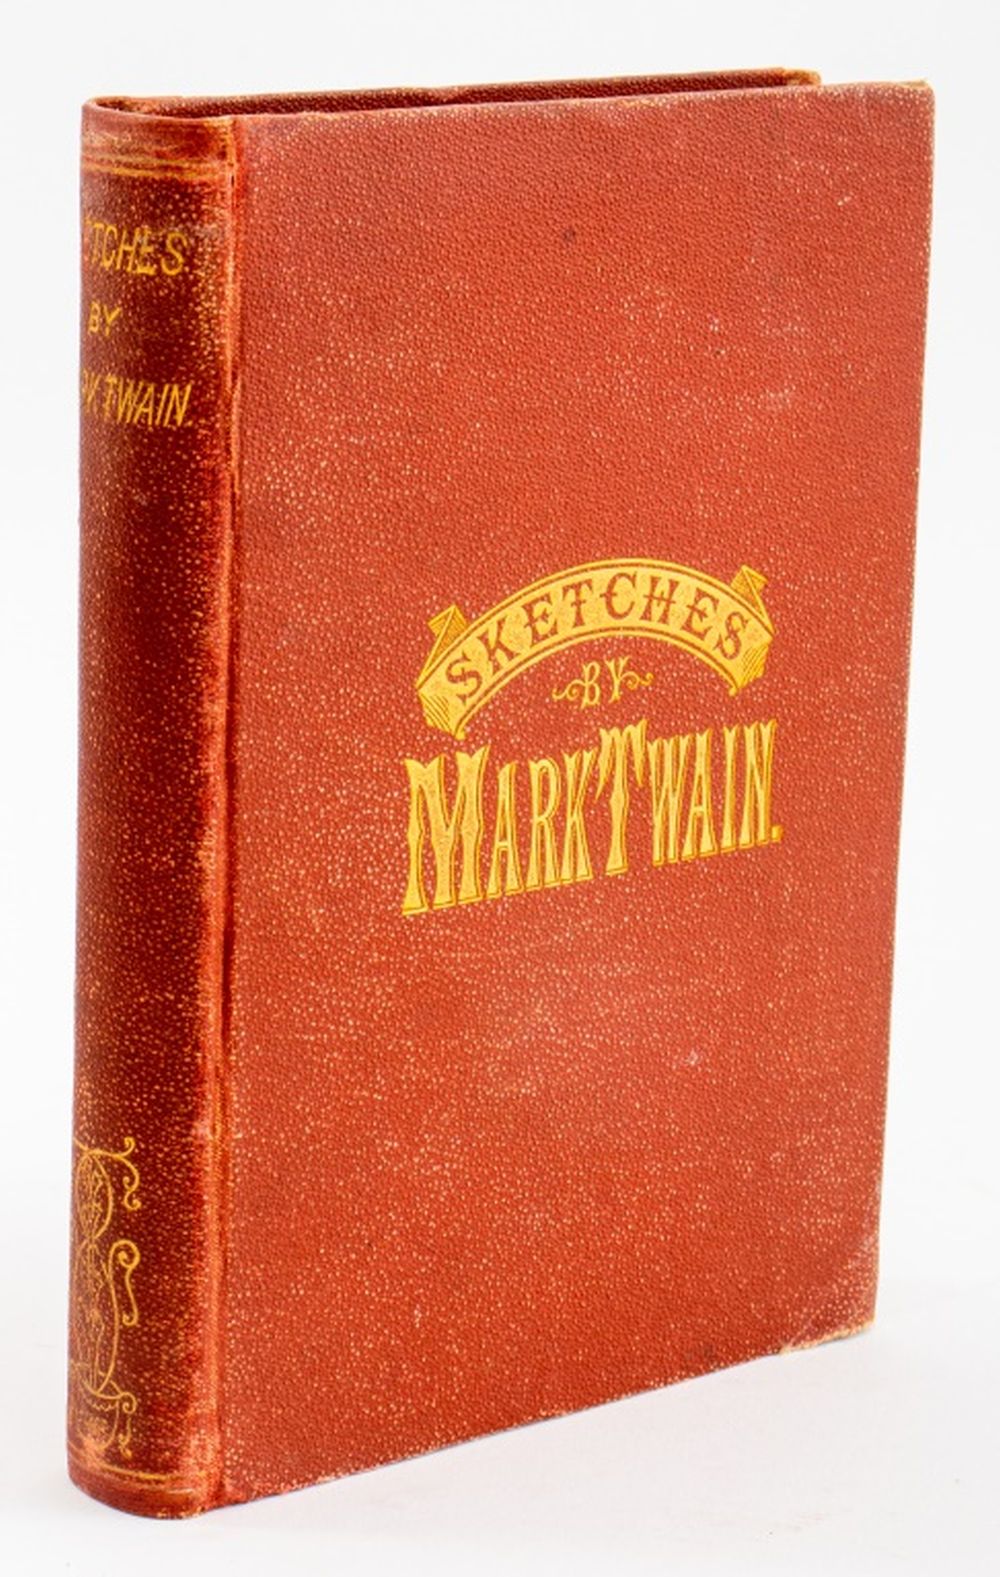 MARK TWAIN "SKETCHES" 1879 CANADIAN